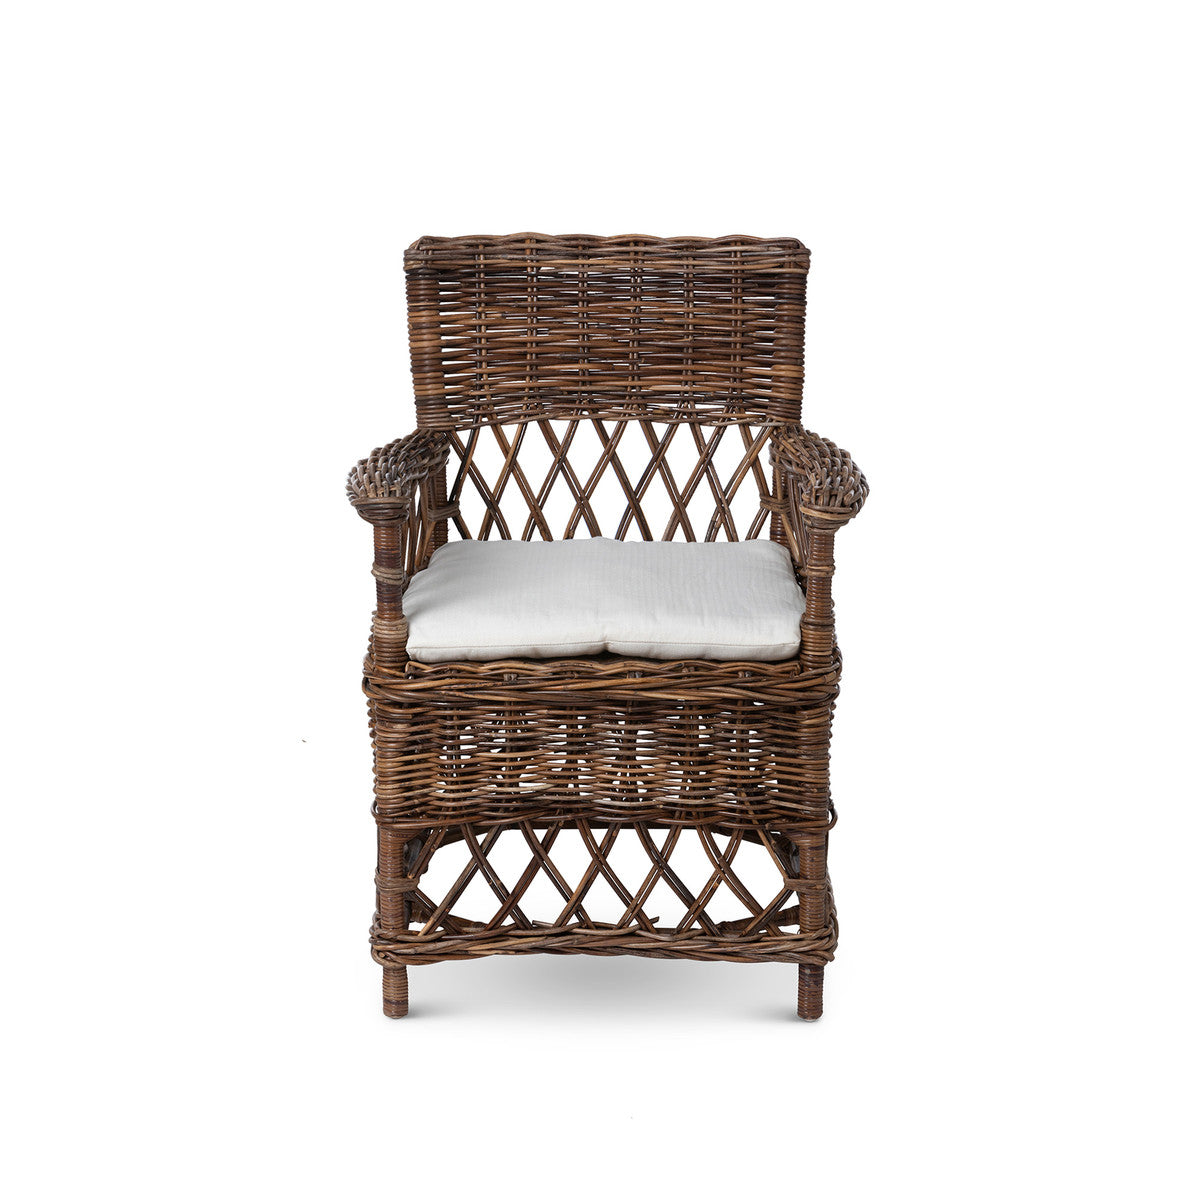 Woven Rattan Plantation Accent Chair